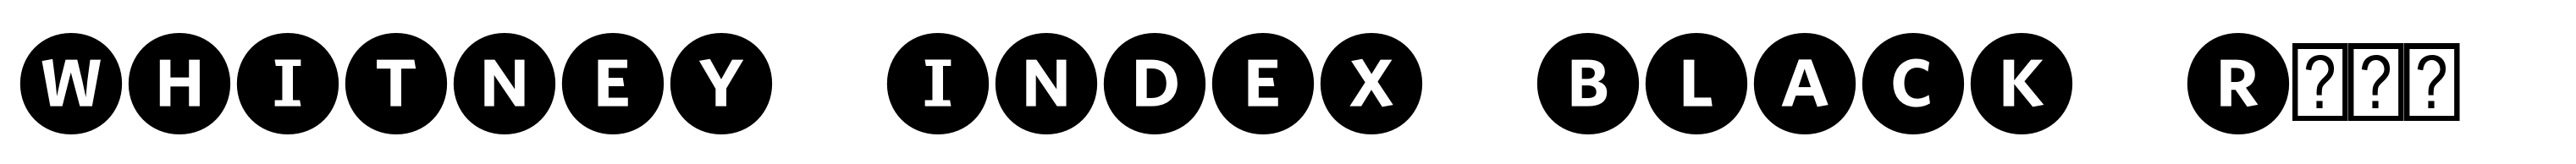 Whitney Index Black Round Bold